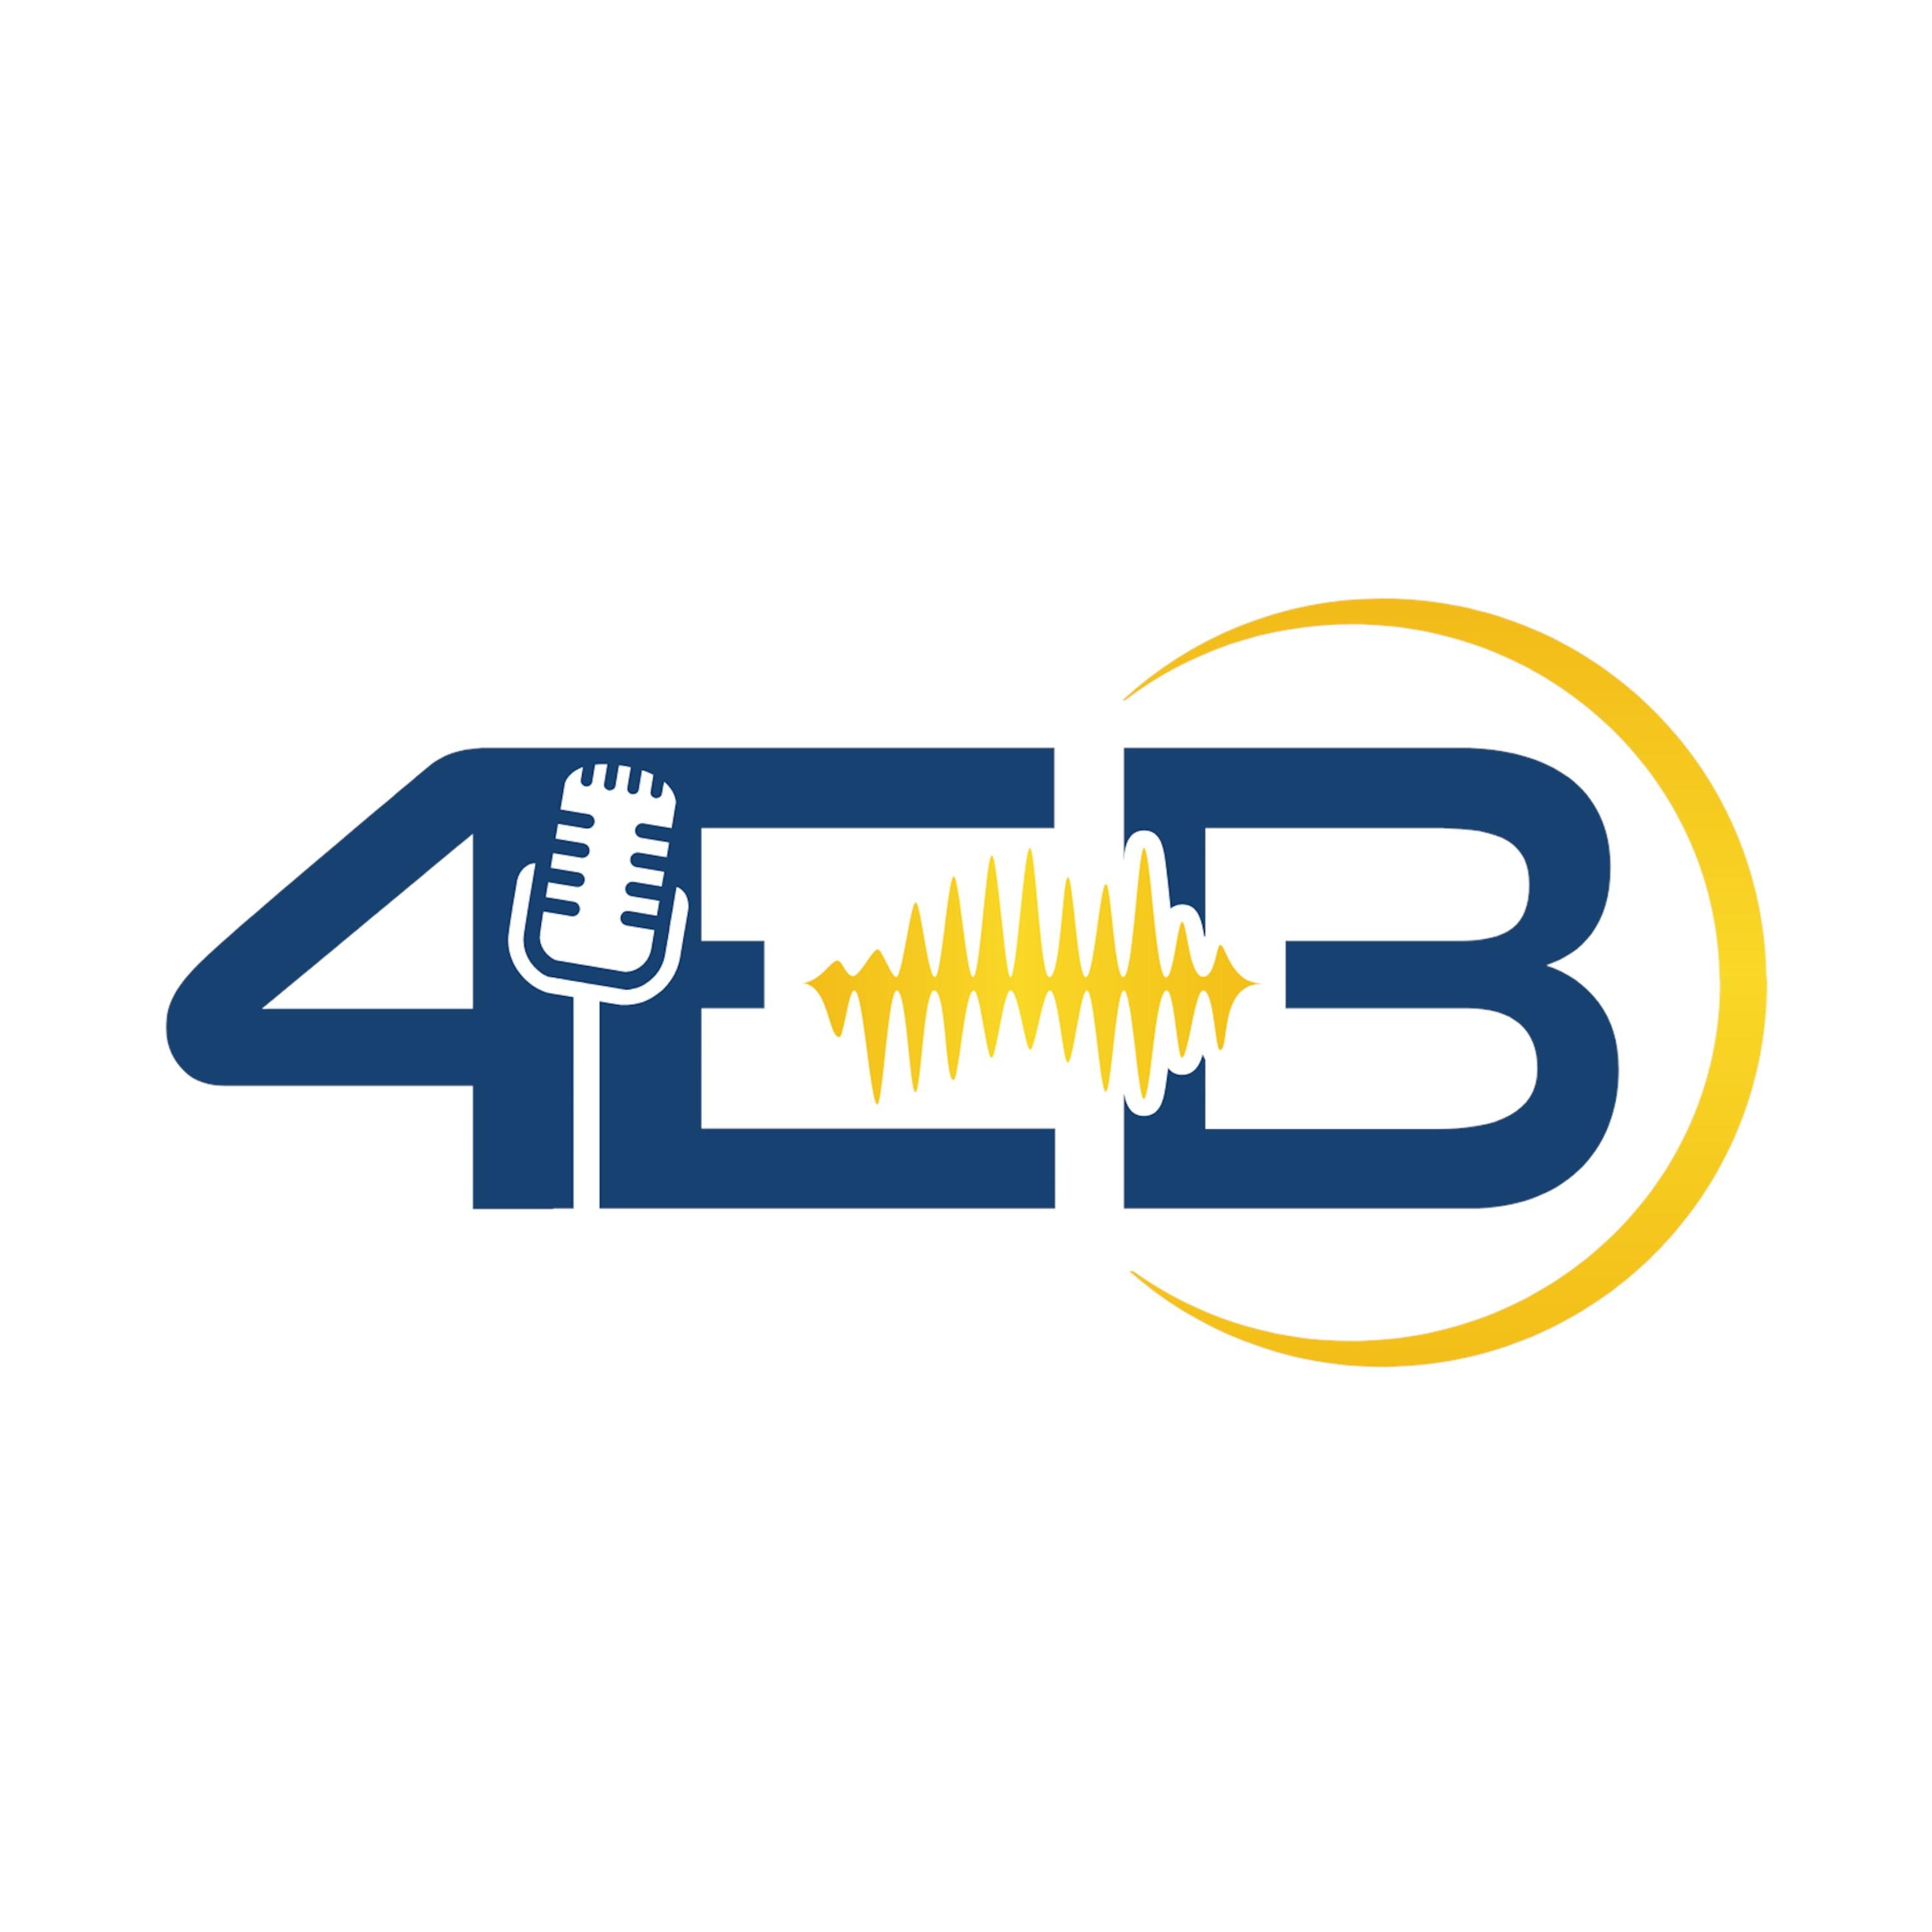 Radio 4EB